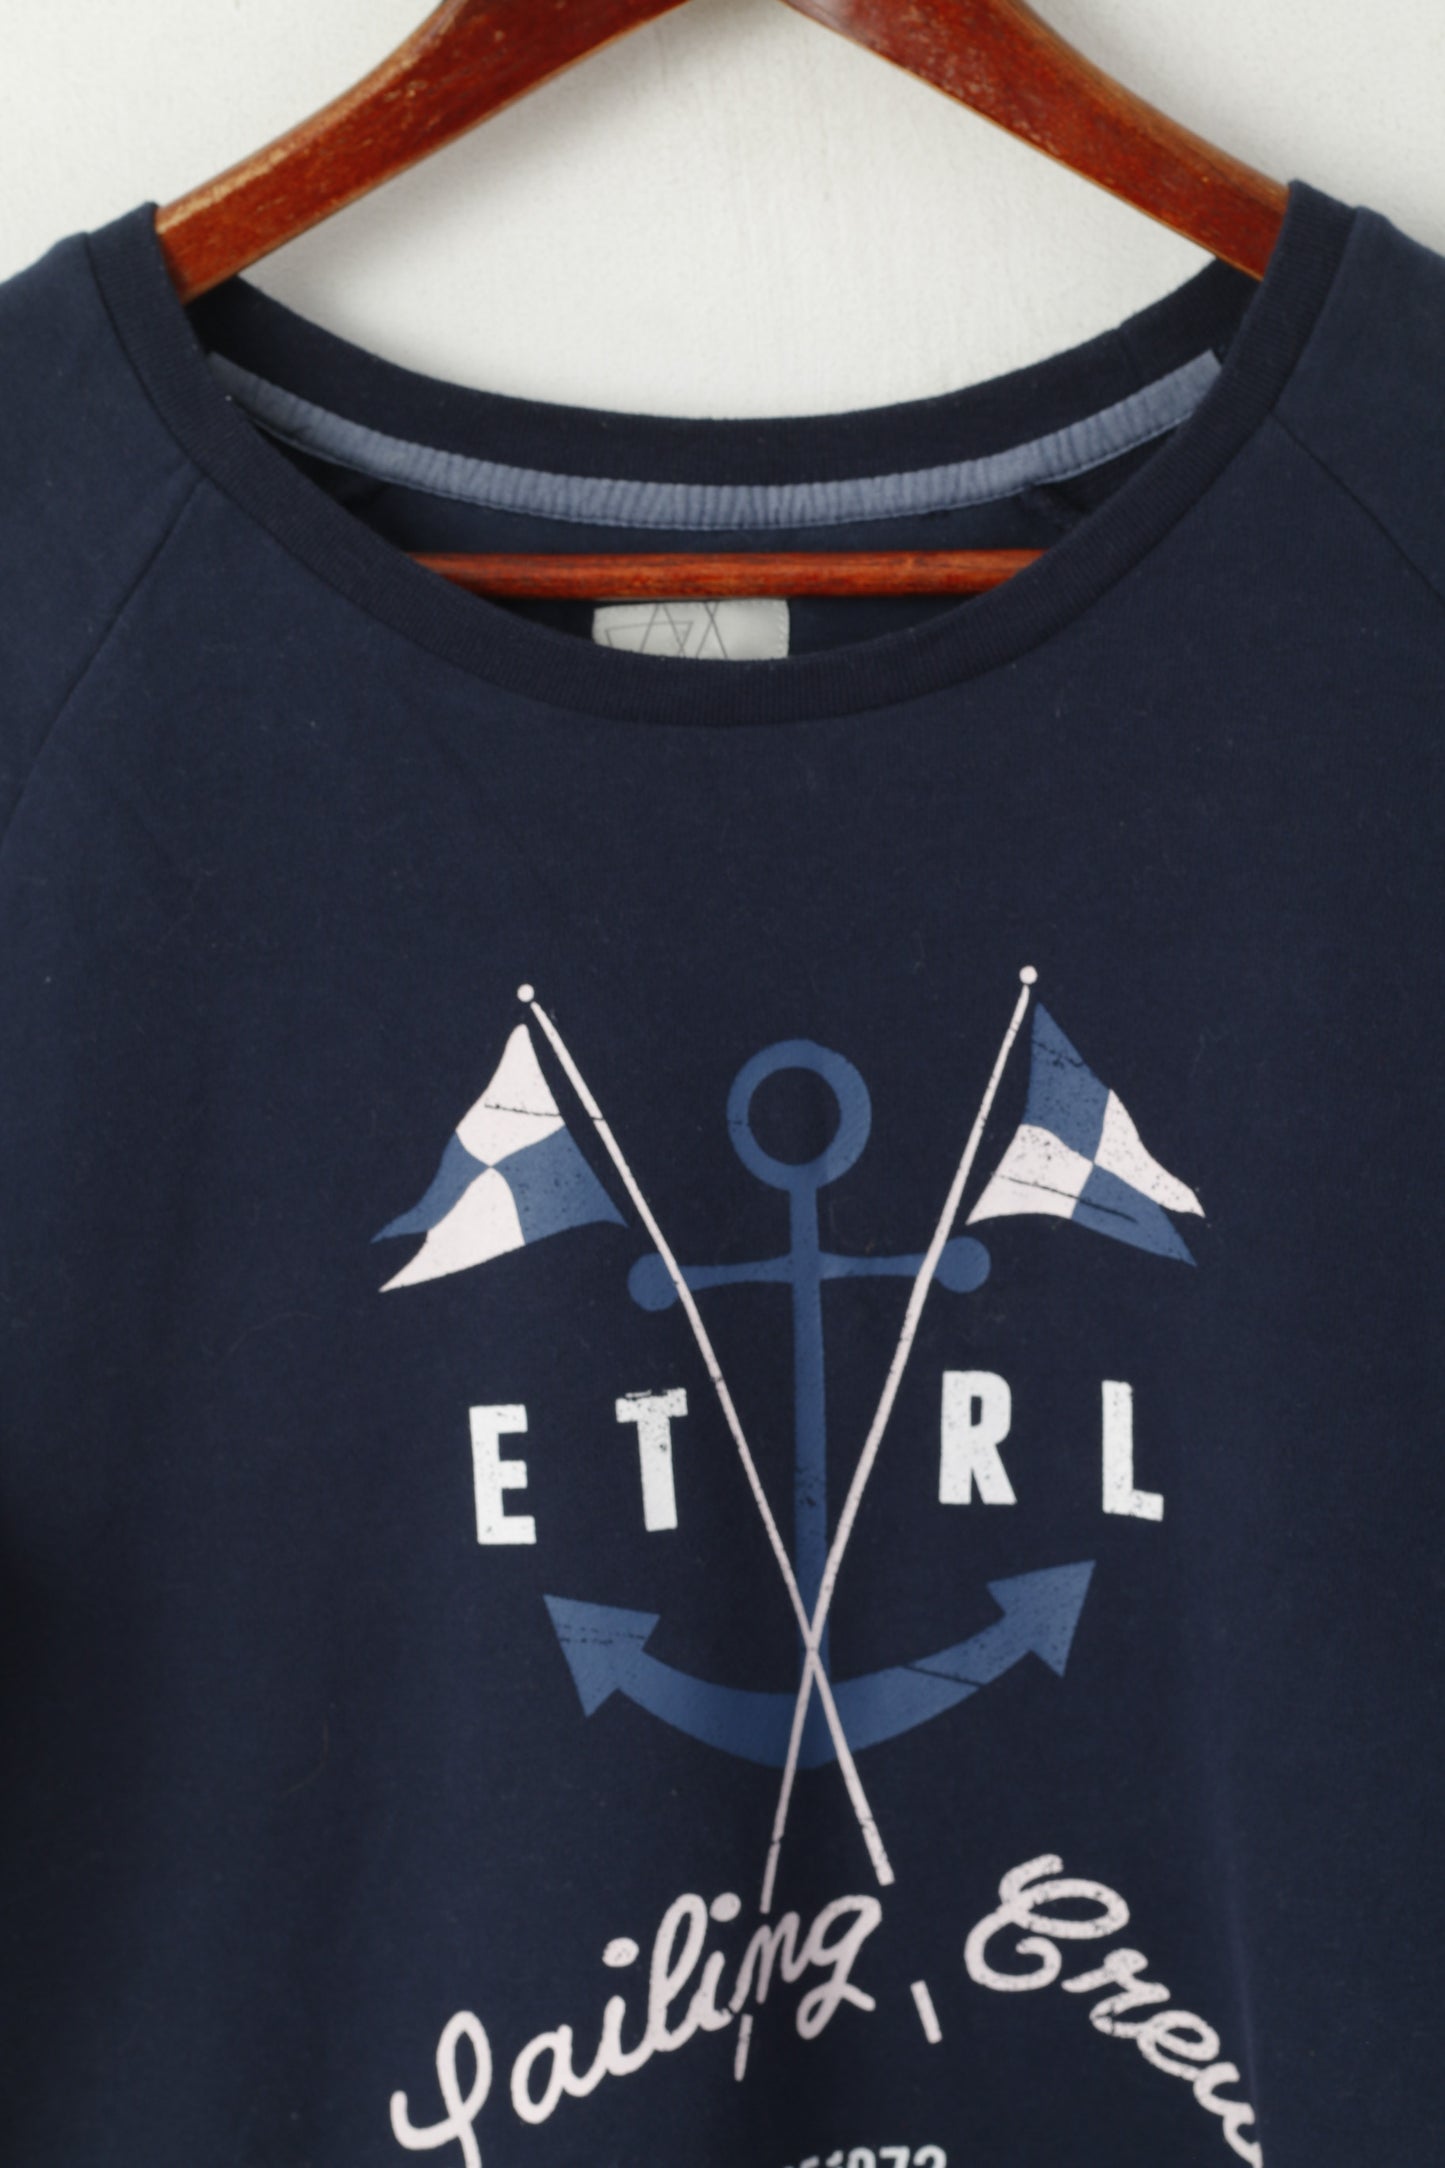 Etirel Women M Sweatshirt Navy Cotton Sailin Crew Graphic Soft Crew Neck Top